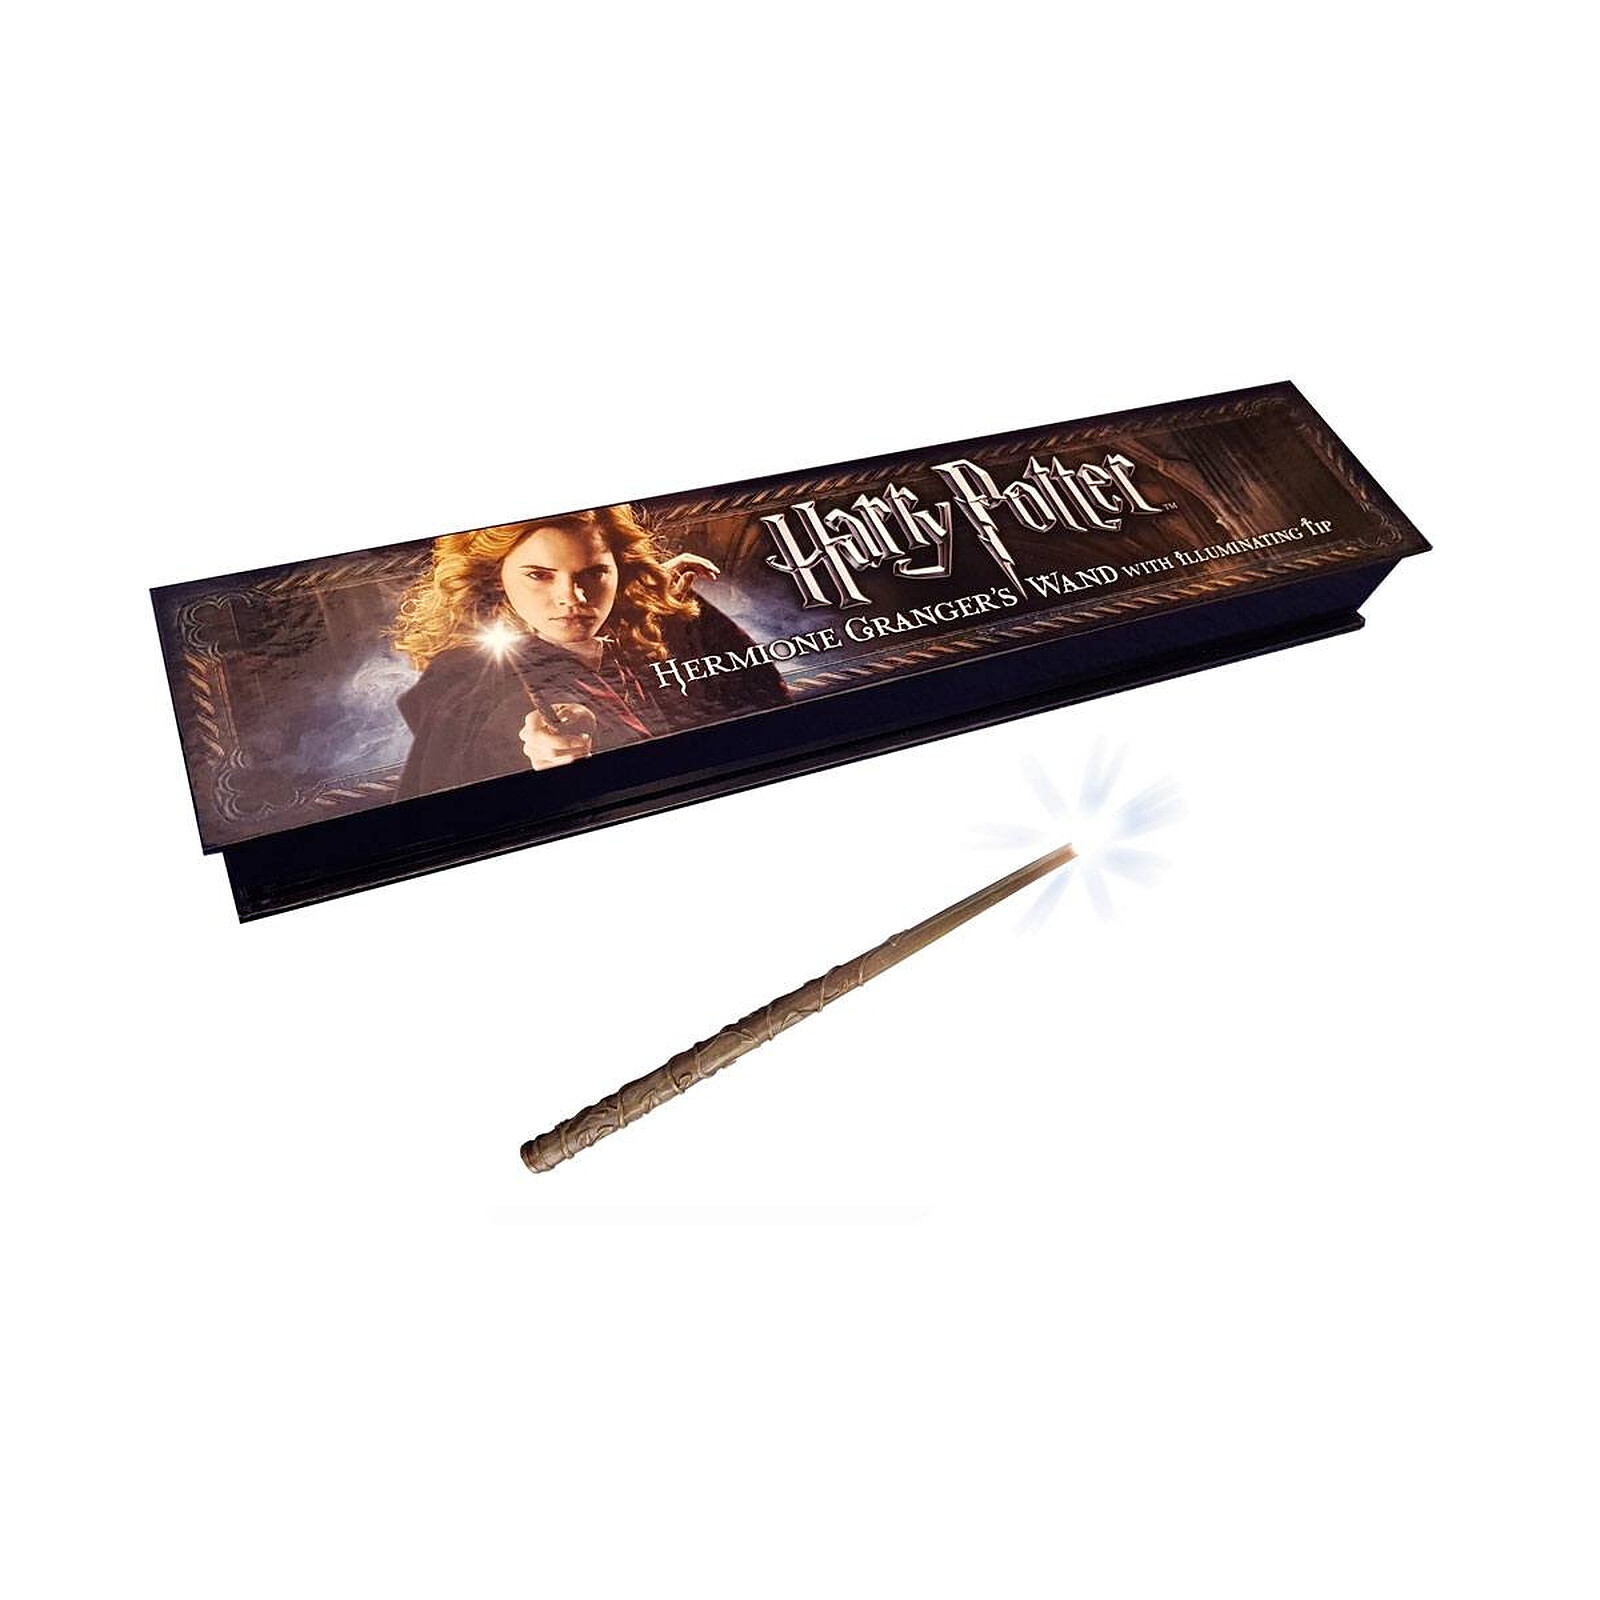 Harry Potter porte-clés baguette de Harry lumineuse